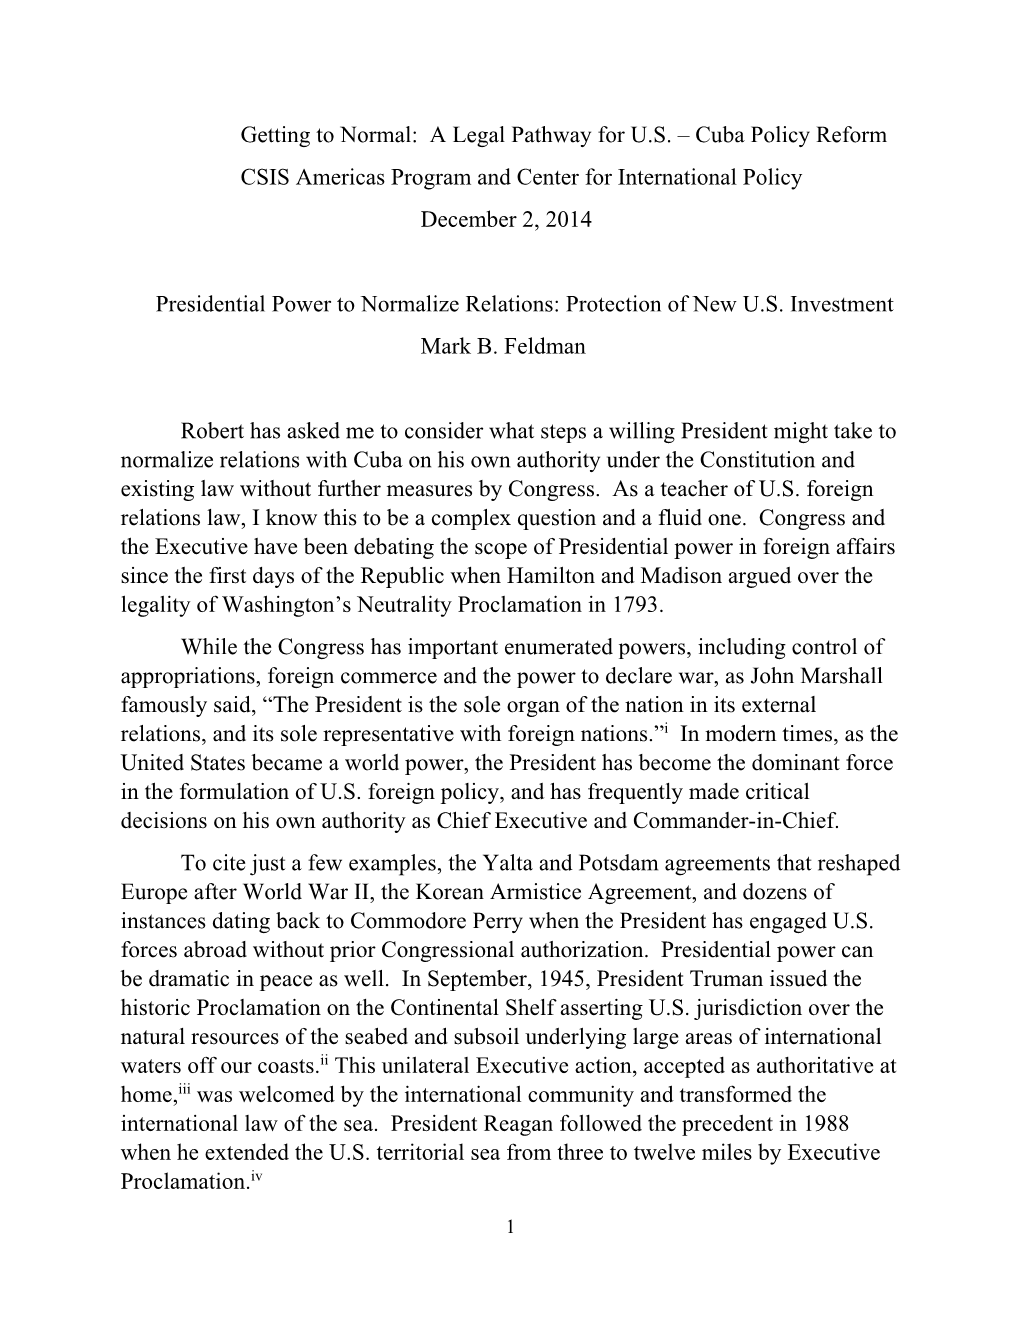 Cuba Policy Reform CSIS Americas Program and Center for International Policy December 2, 2014